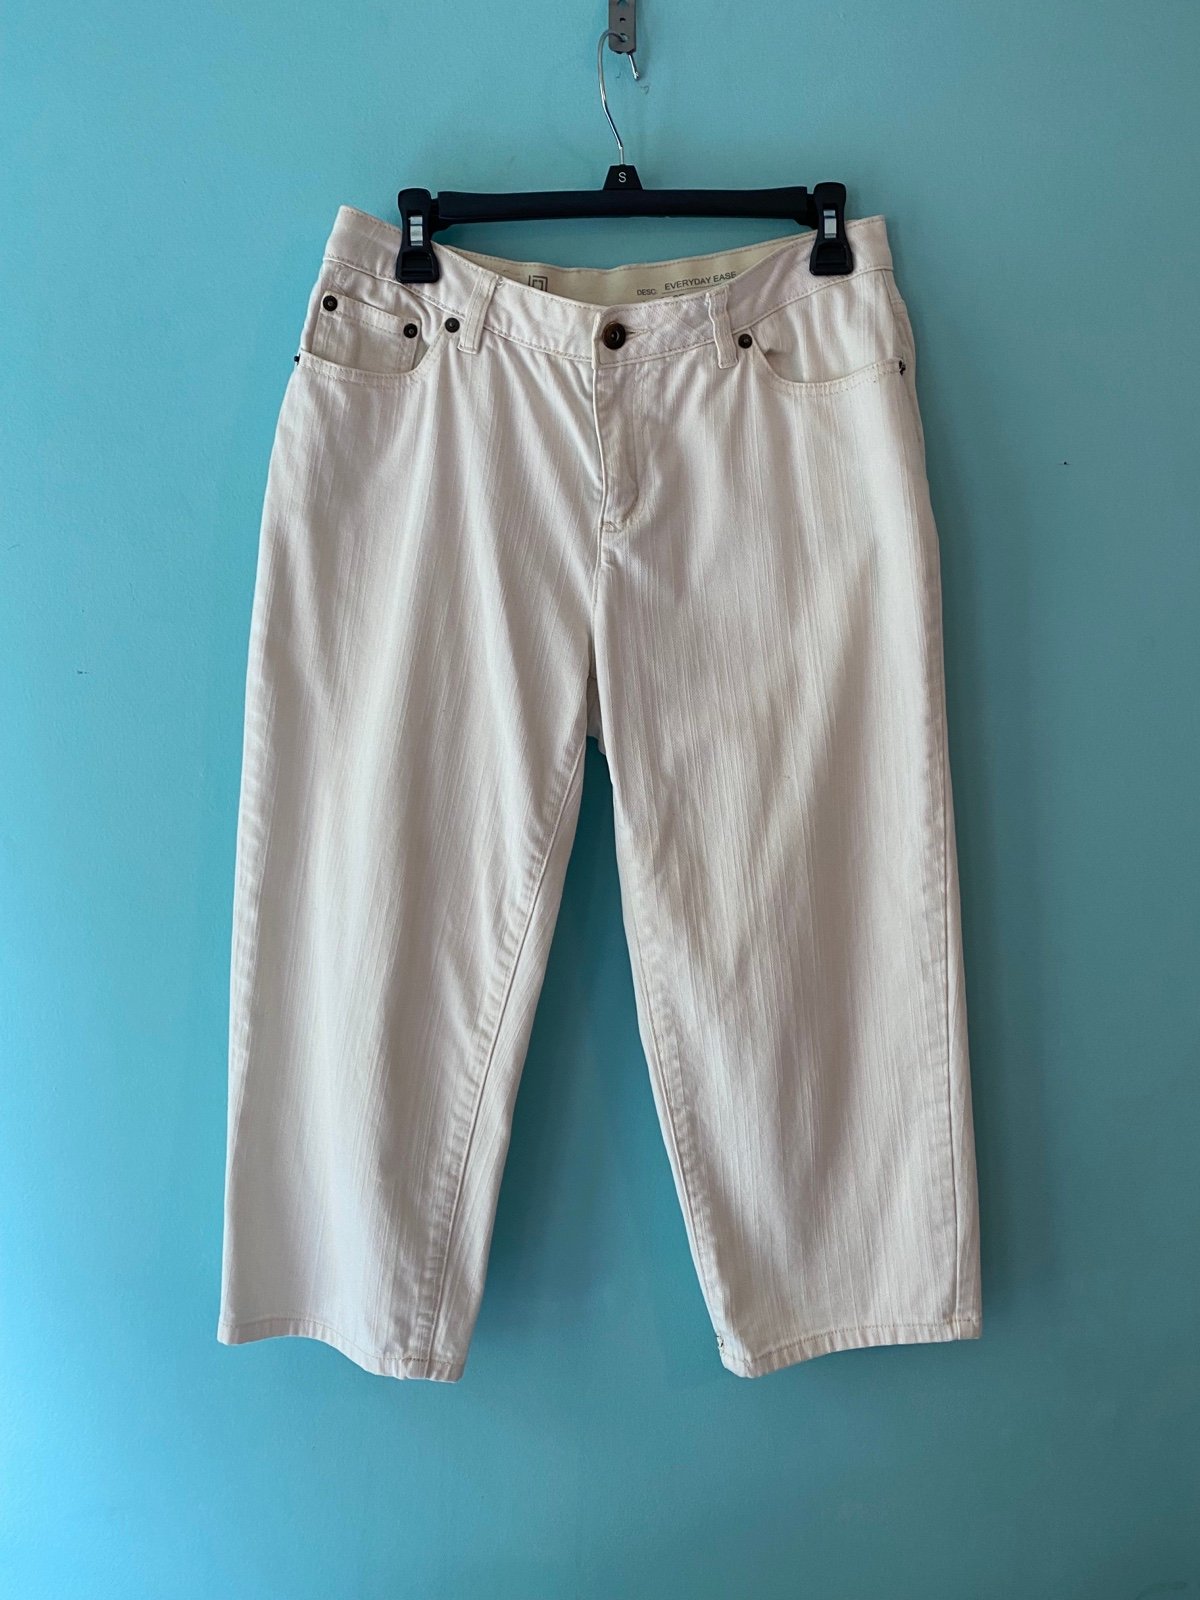 save up to 70% Liz Claiborne Everyday Ease White Crop Pants Size 6 KPk8qn5ez Buying Cheap